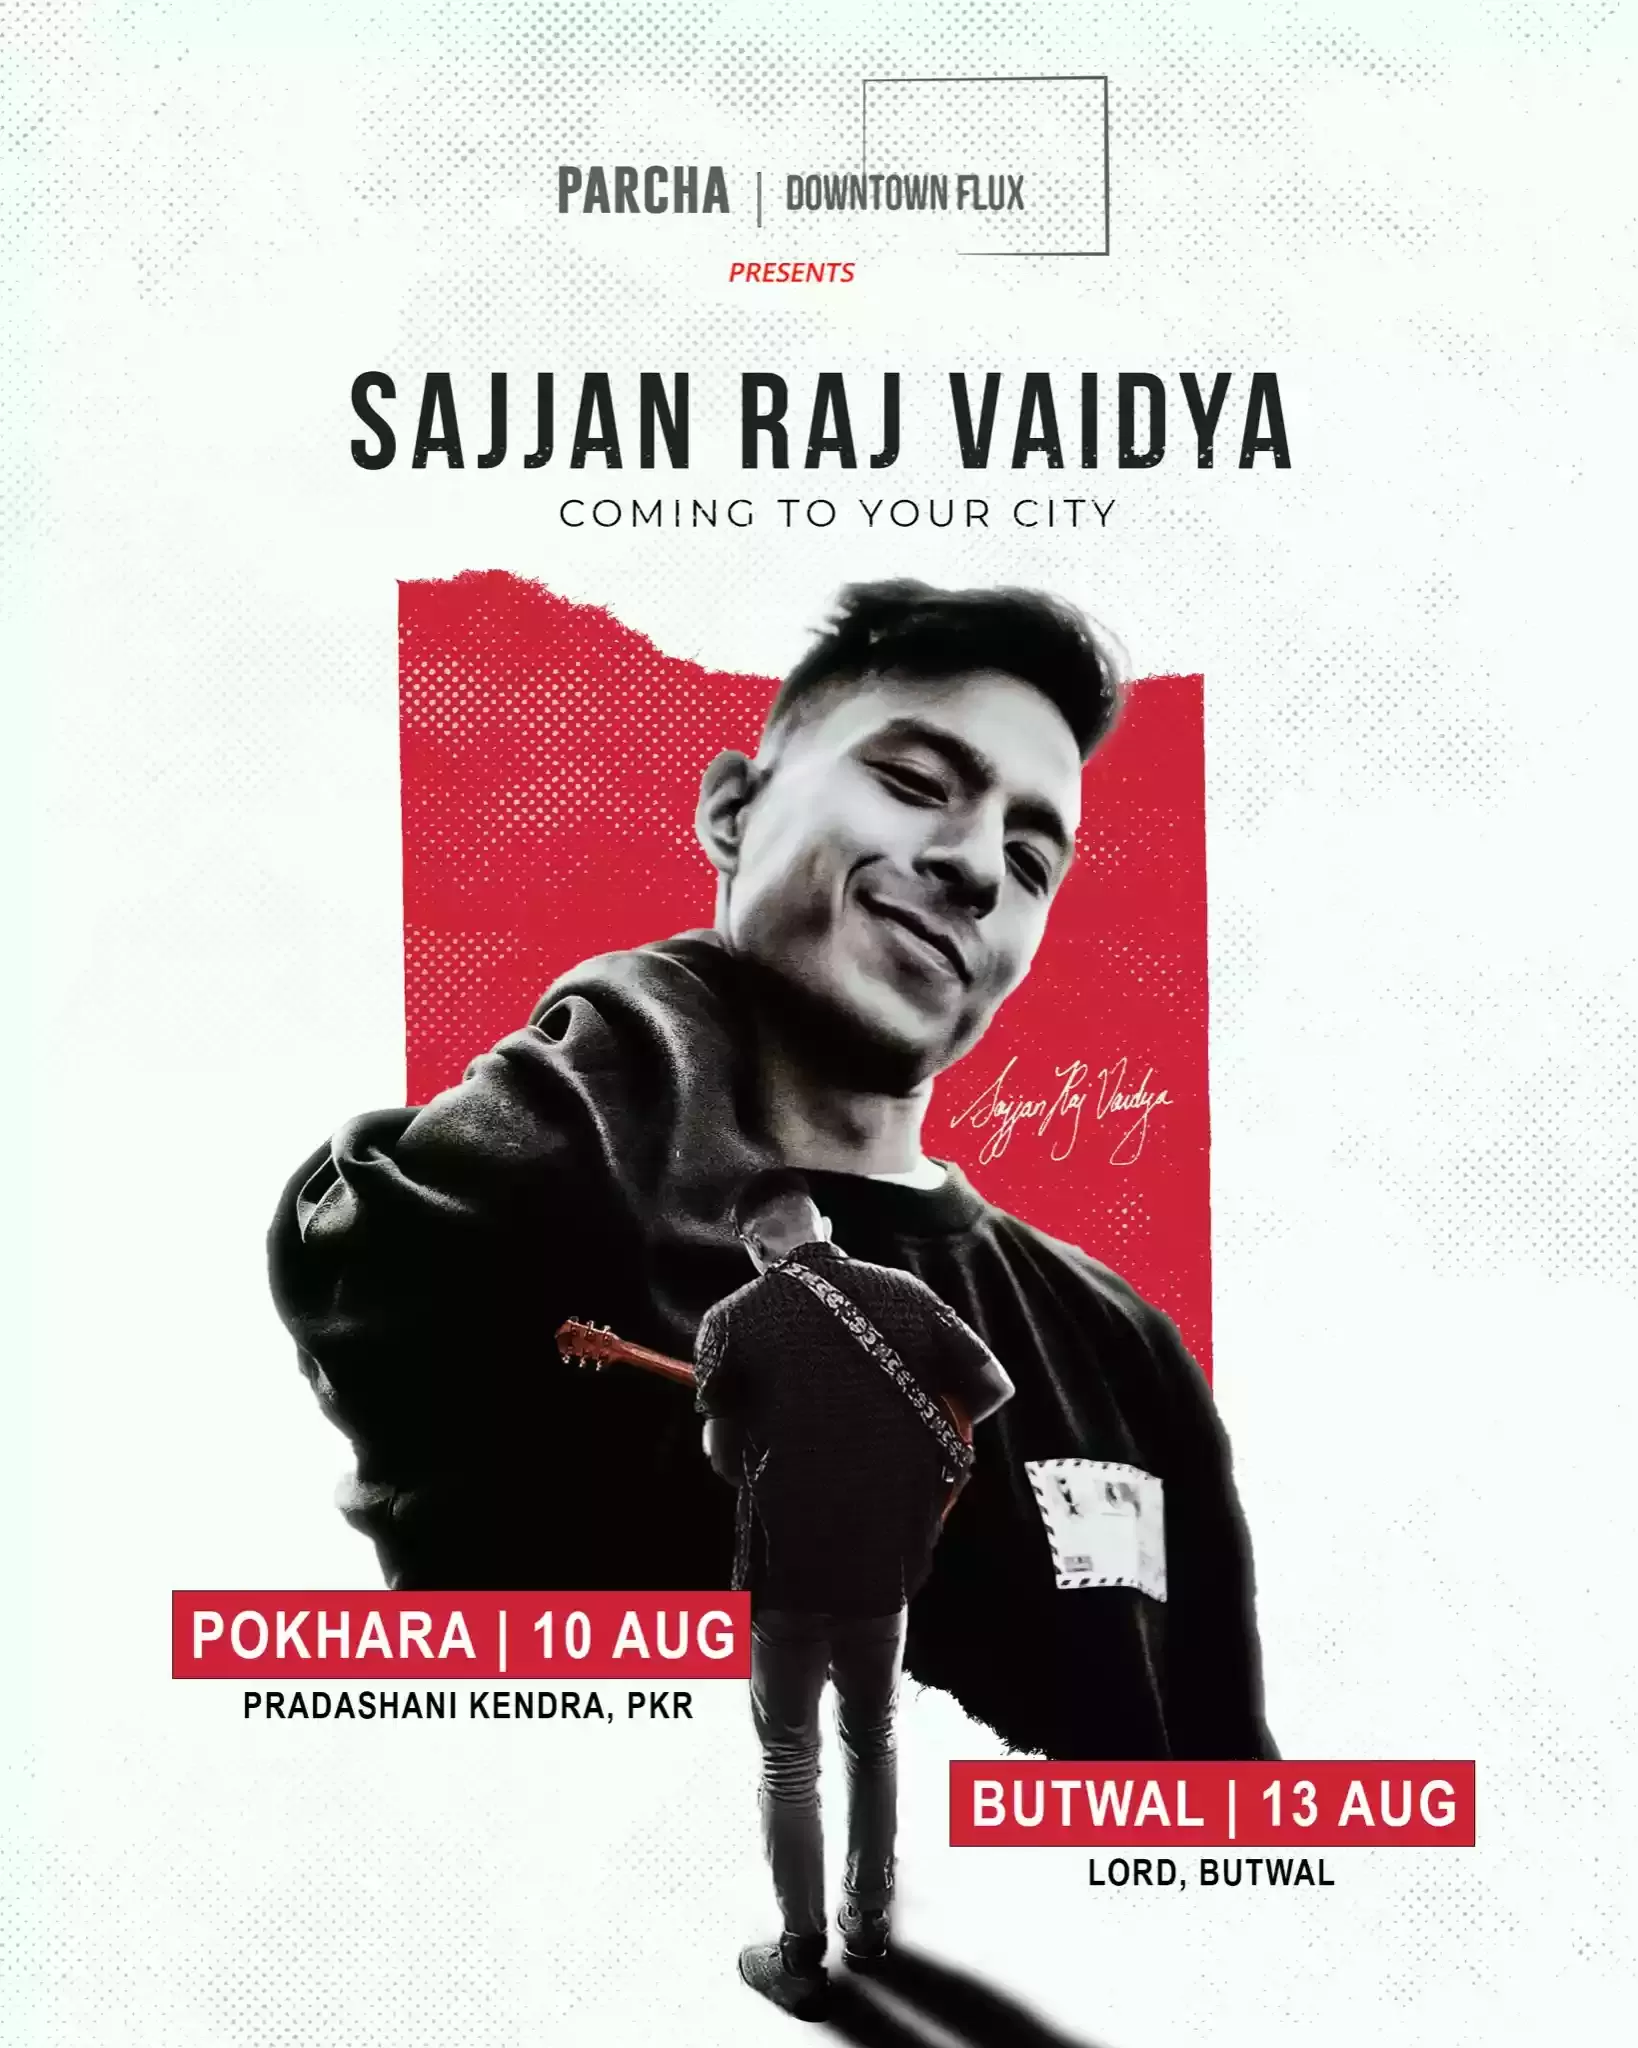 Sajjan Raj Vaidya is Coming to Pokhara For The Grand Concert